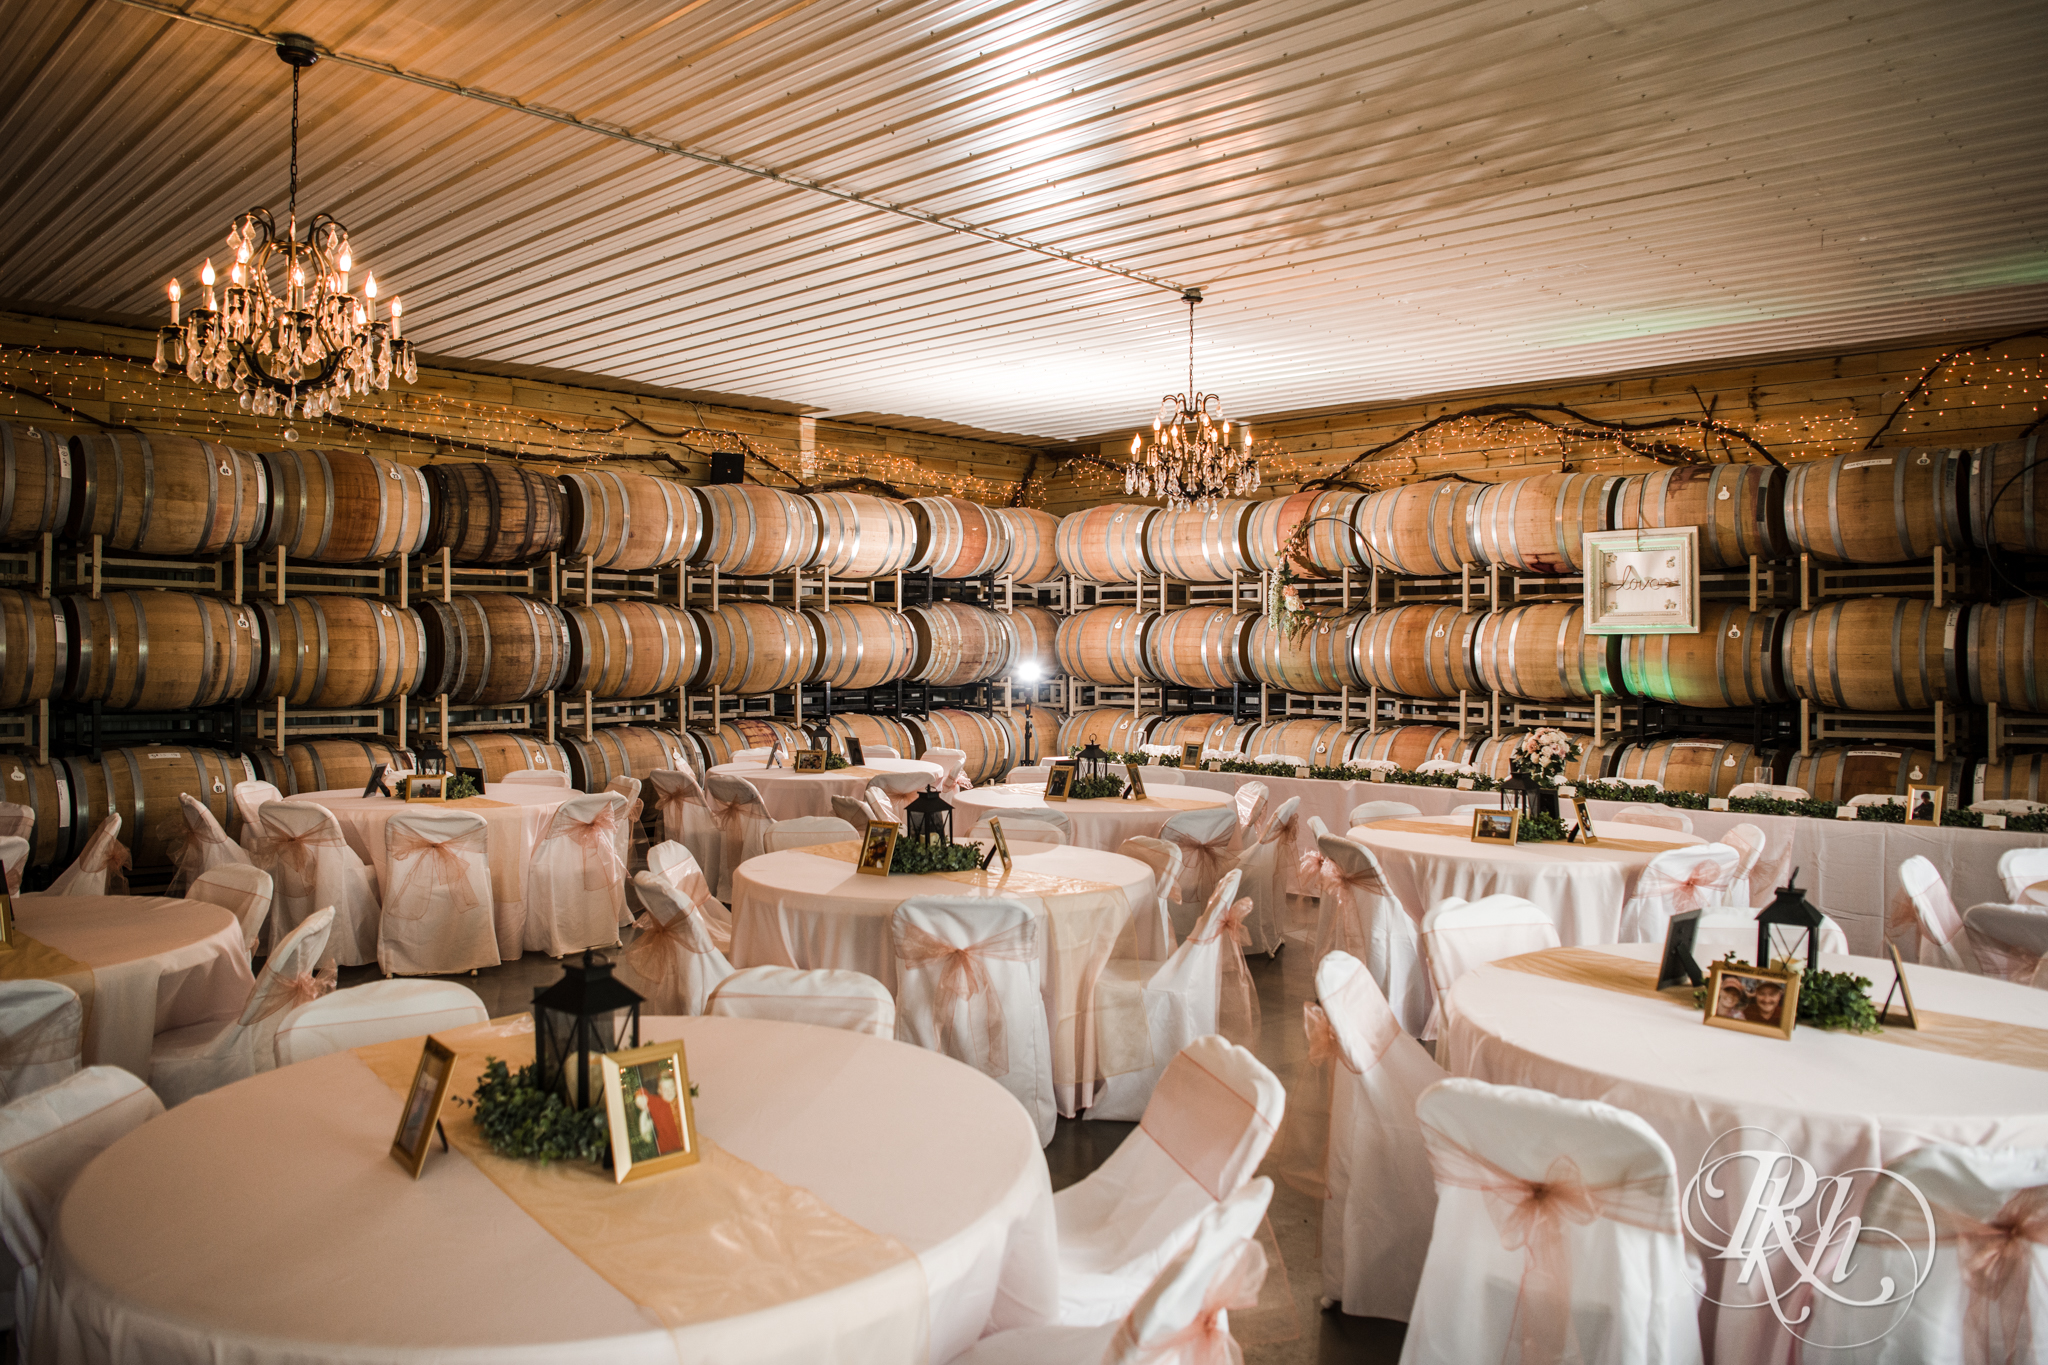 Indoor summer wedding reception setup at Next Chapter Winery in New Prague, Minnesota.